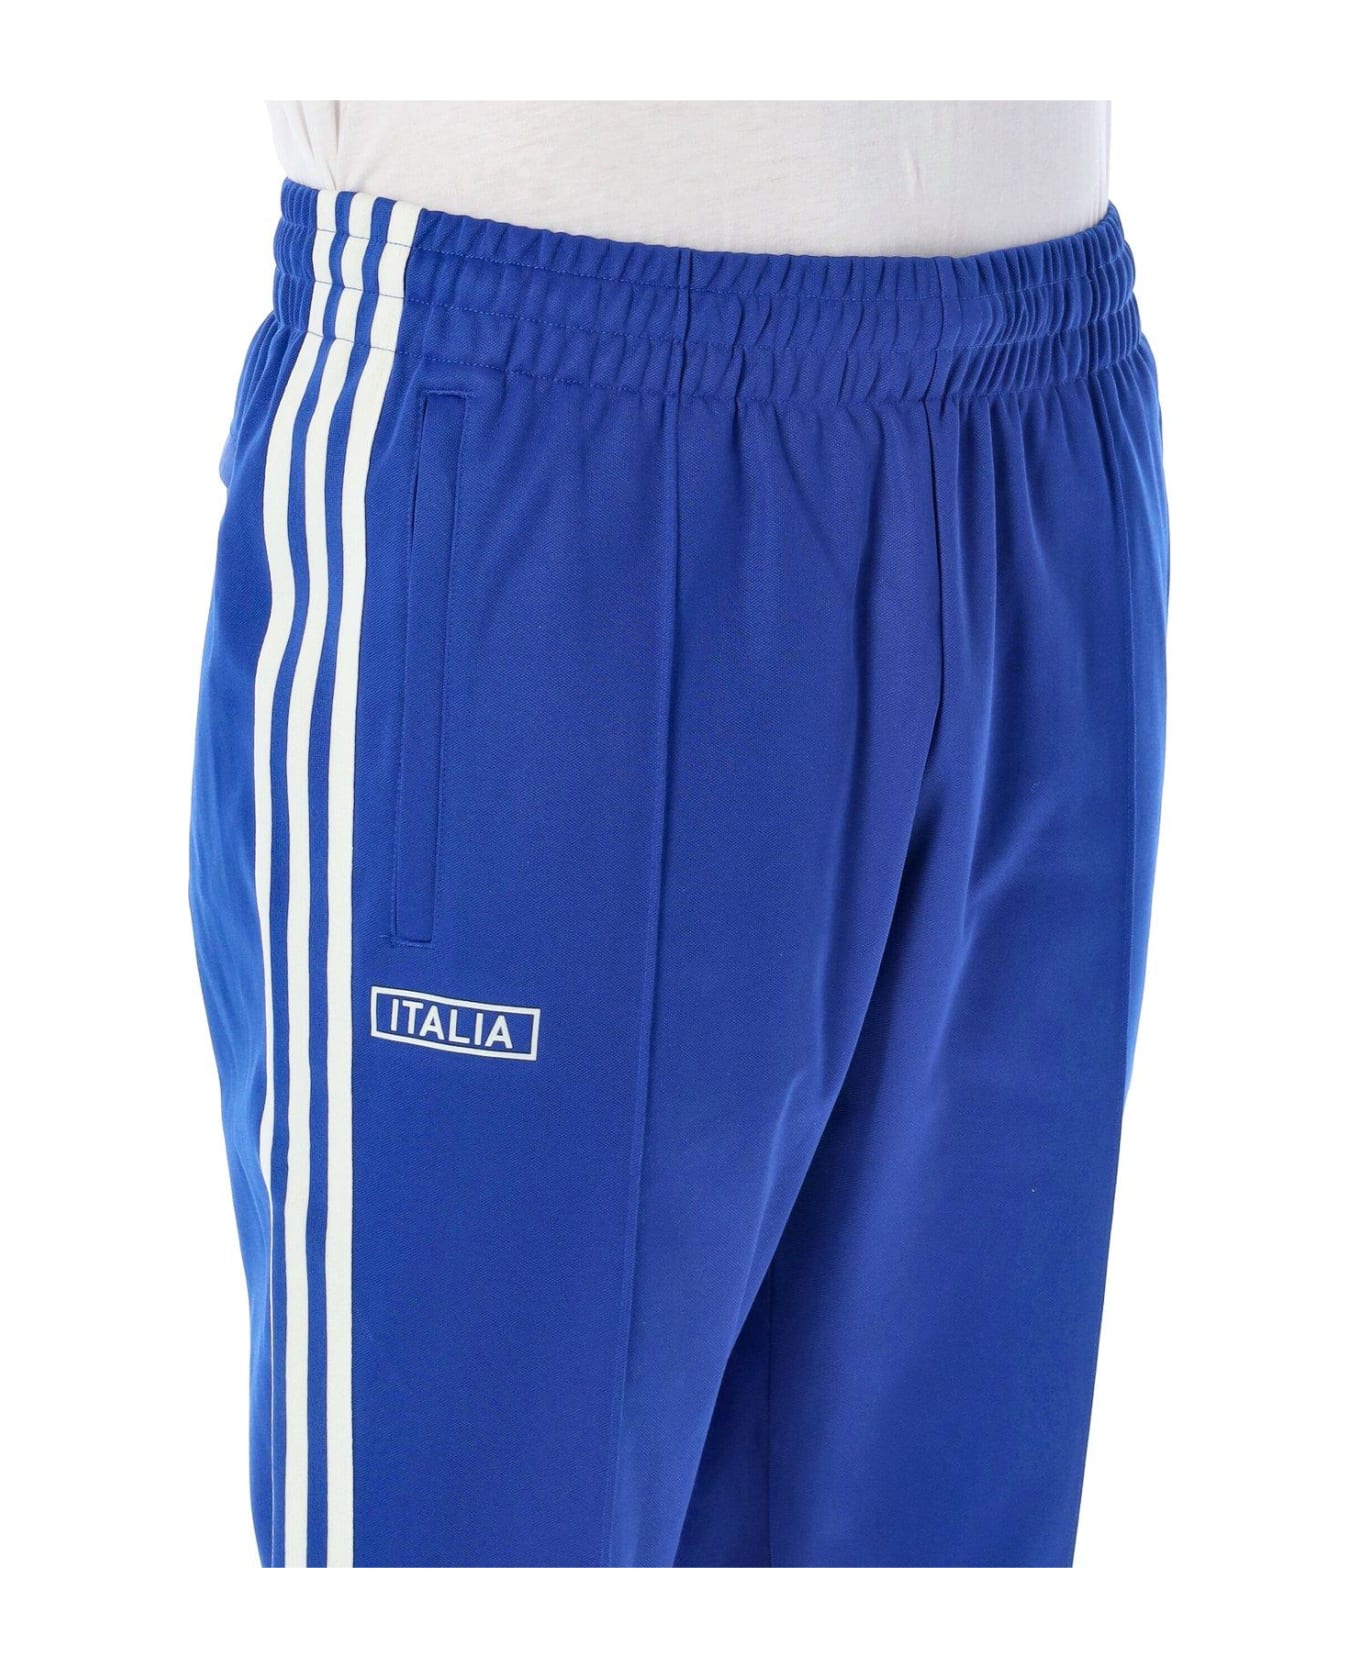 Adidas Originals Straight Leg Track Trousers - Gnawed Blue